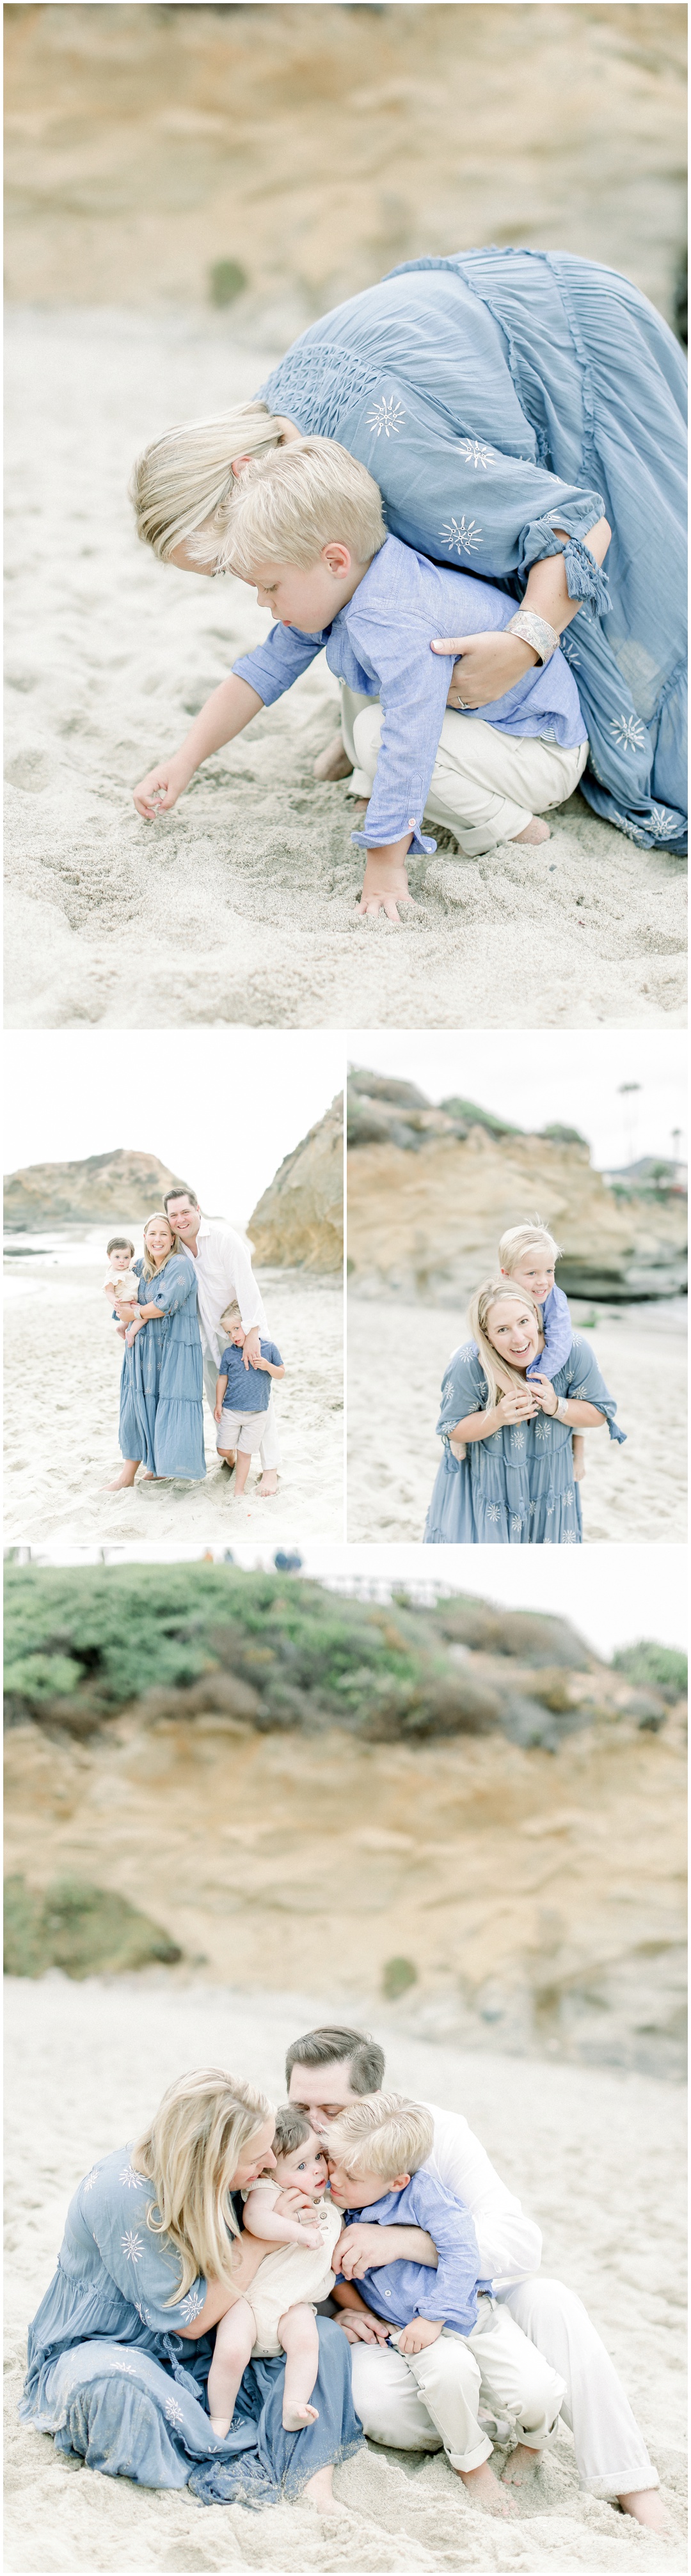 Newport+Beach+Newborn+Photographer+Orange+County+Family+Photographer+Cori+Kleckner+Photography+The+McClure+Family+Gracie+McClure_4380.jpg